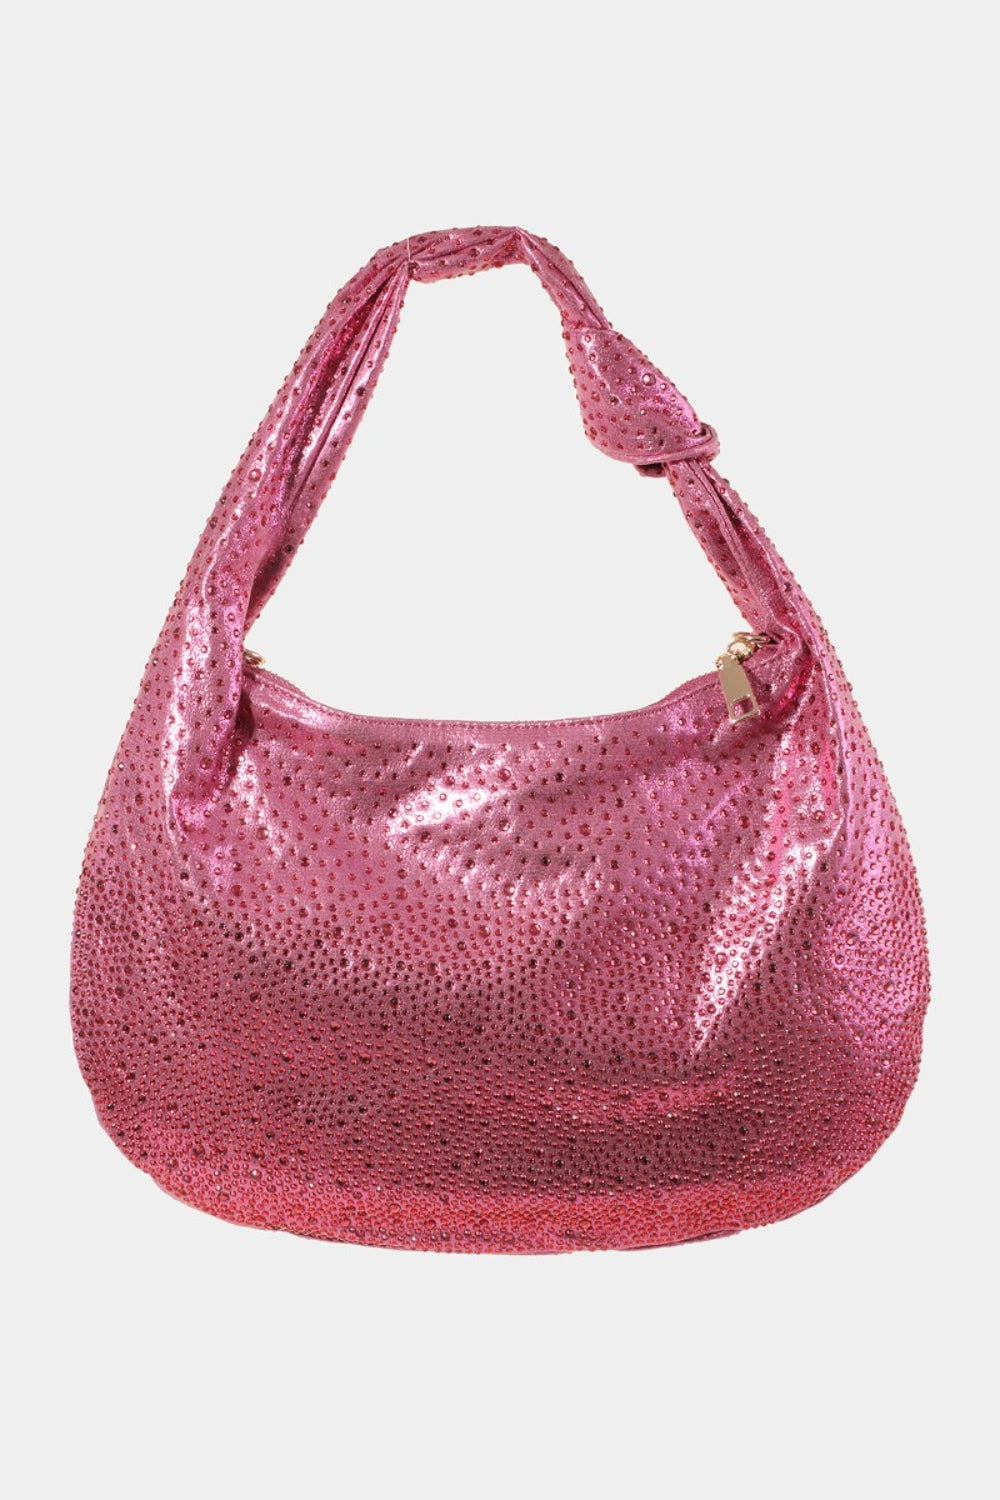 TEEK - Rhinestone Studded Handbag BAG TEEK Trend Fuchsia One Size 